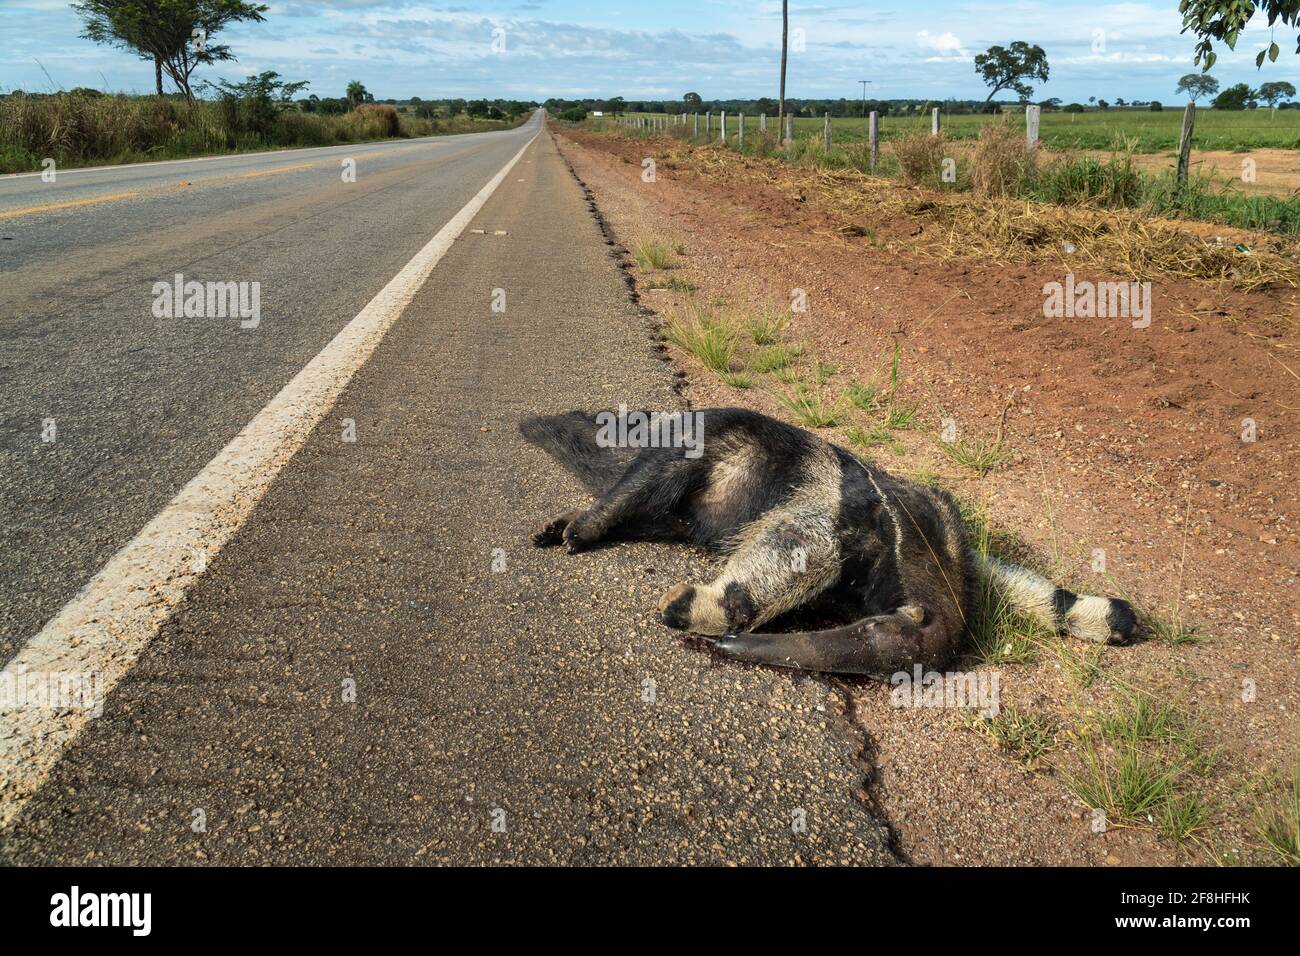 Sad scene of dead giant anteater, Myrmecophaga tridactyla, run over, killed by vehicle on road. Wild animal roadkill in the amazon rainforest Brazil Stock Photo